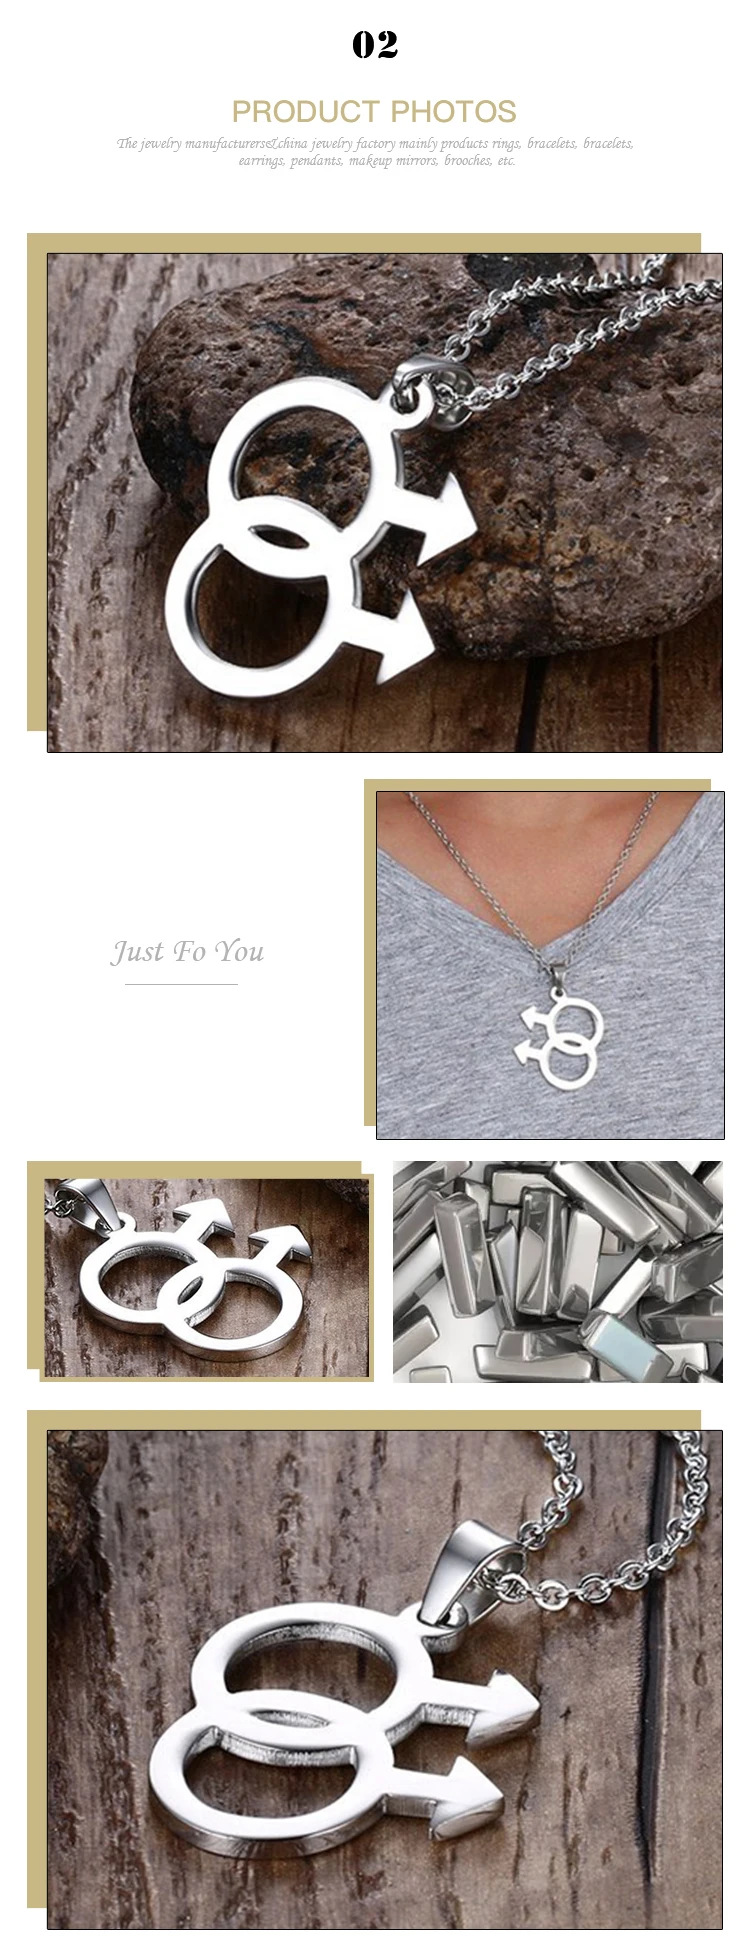 Wholesale creative design stainless steel silver men's pendant necklace PPN-001